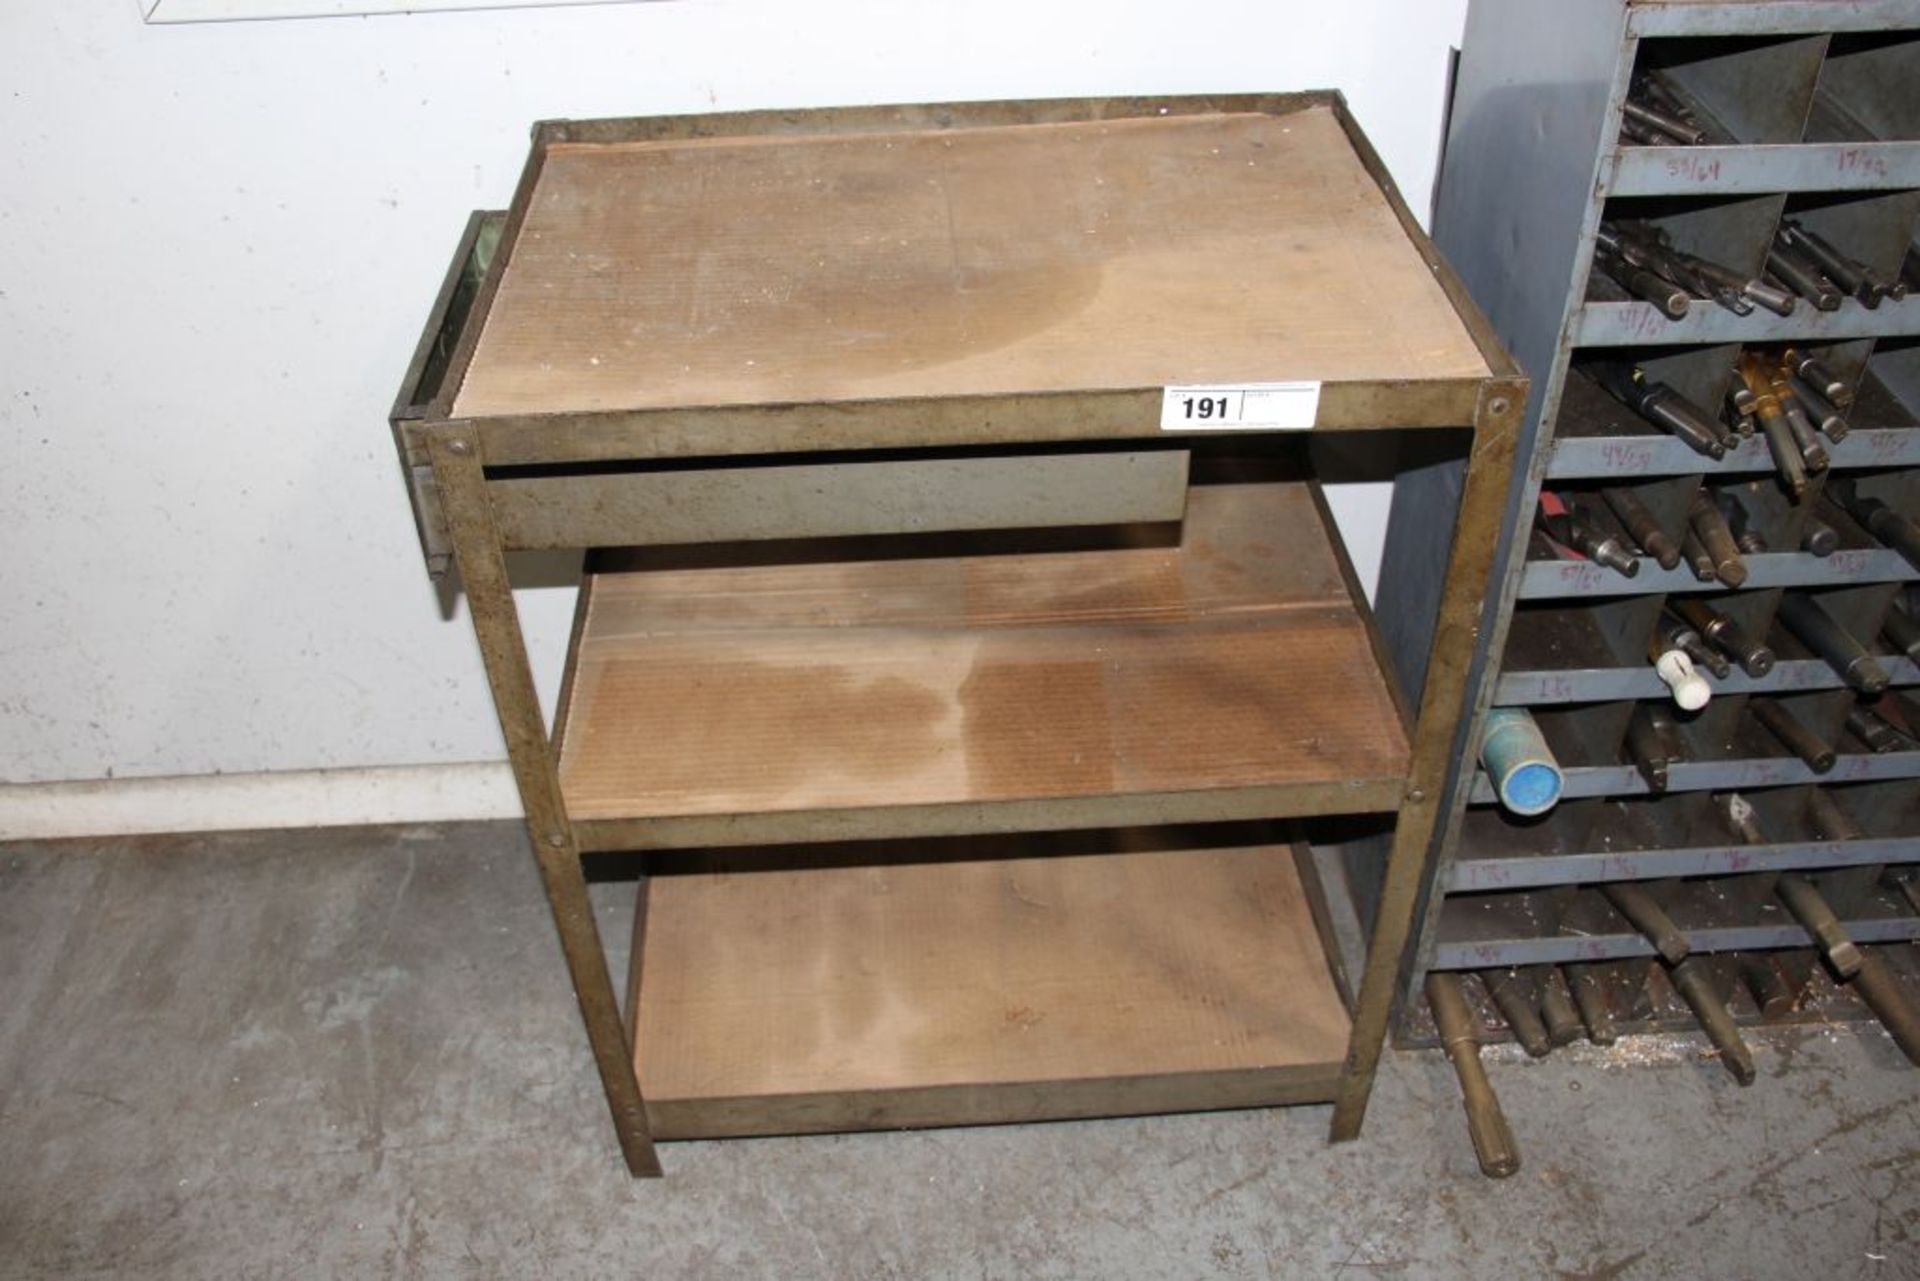 Metal 3-shelf with drawer, 28"x20"x34" high